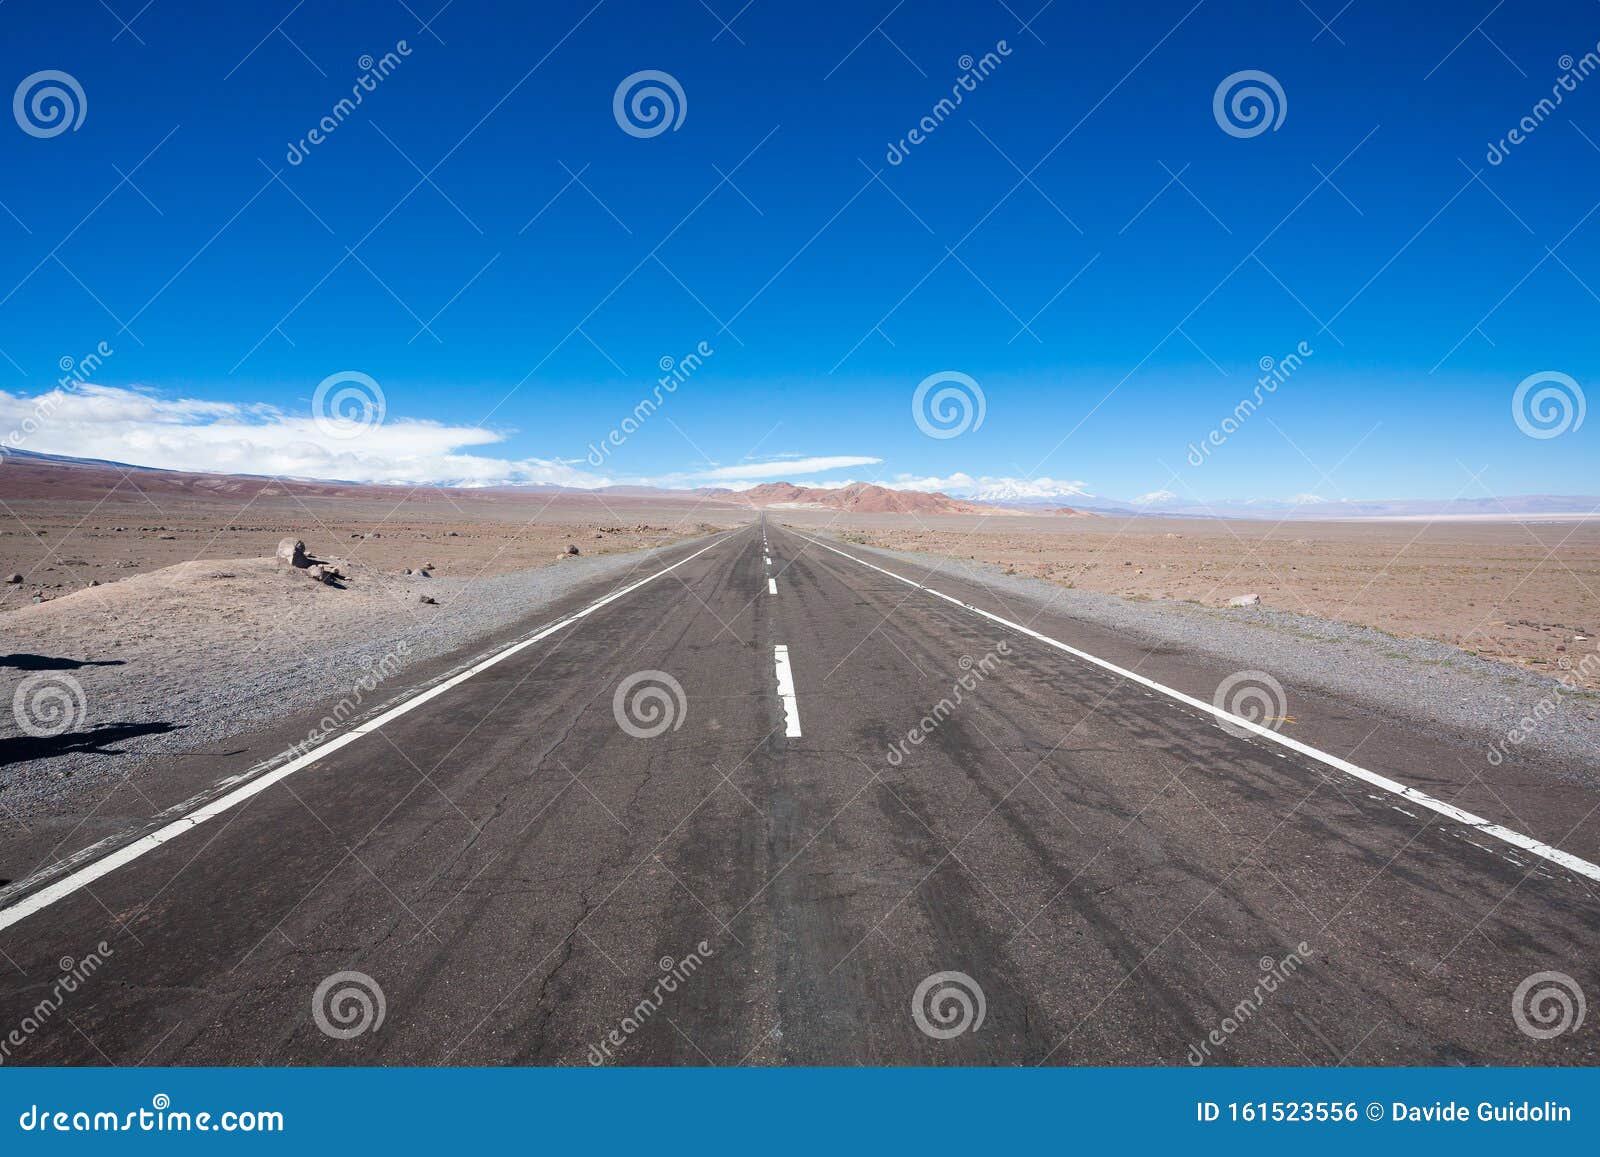 road to san pedro de atacama, chile landscape